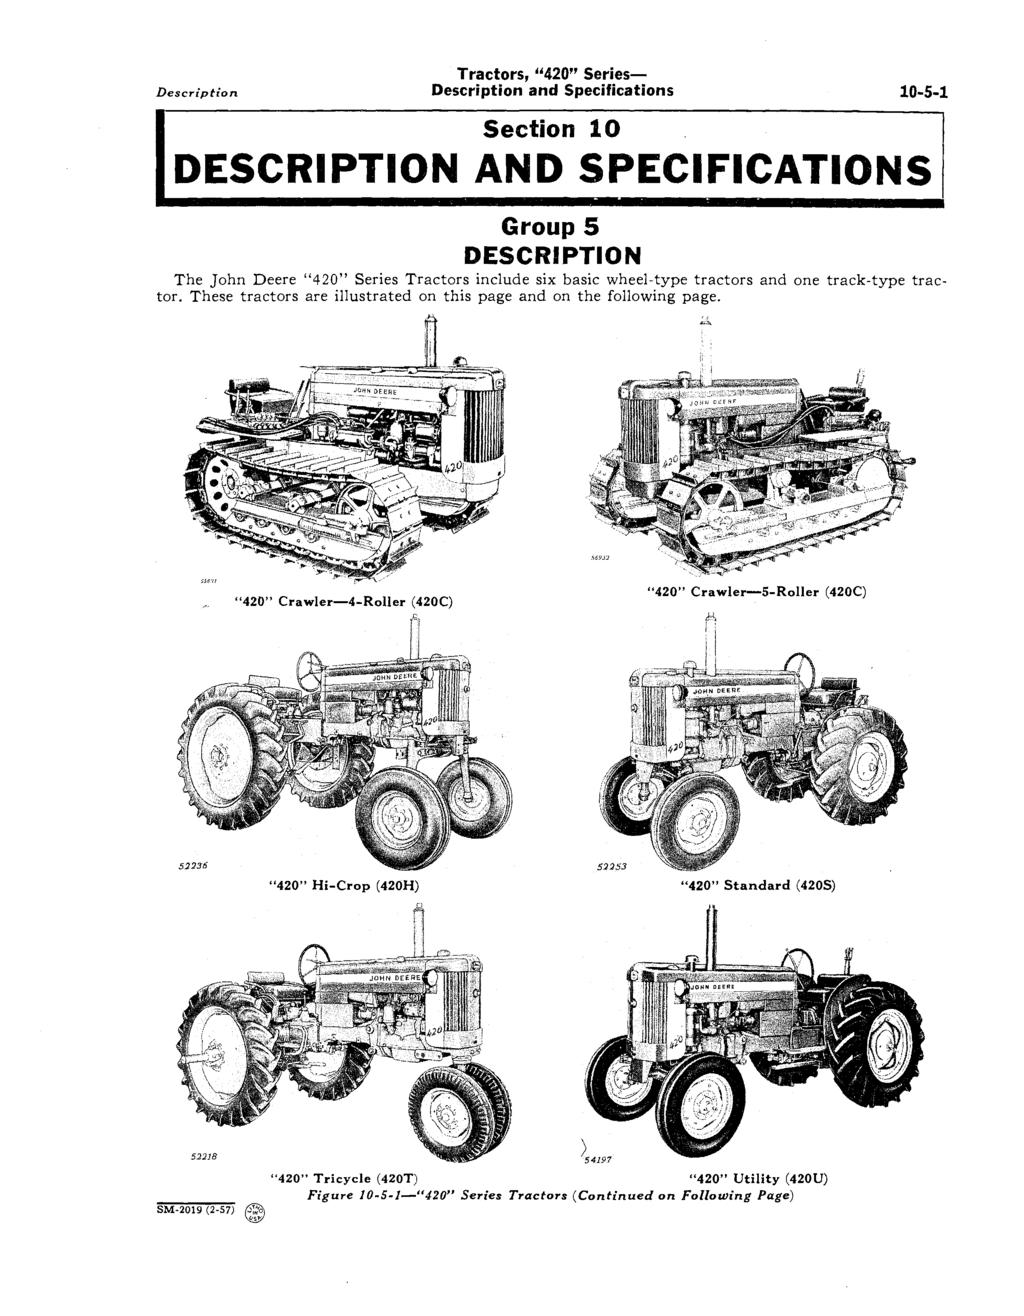 Description Tractors, "420" Series Description and Specifications Section 10 DESCRIPTION AND SPECIFICATIONS 10-5-1 Group 5 DESCRIPTION The John Deere "420" Series Tractors include six basic